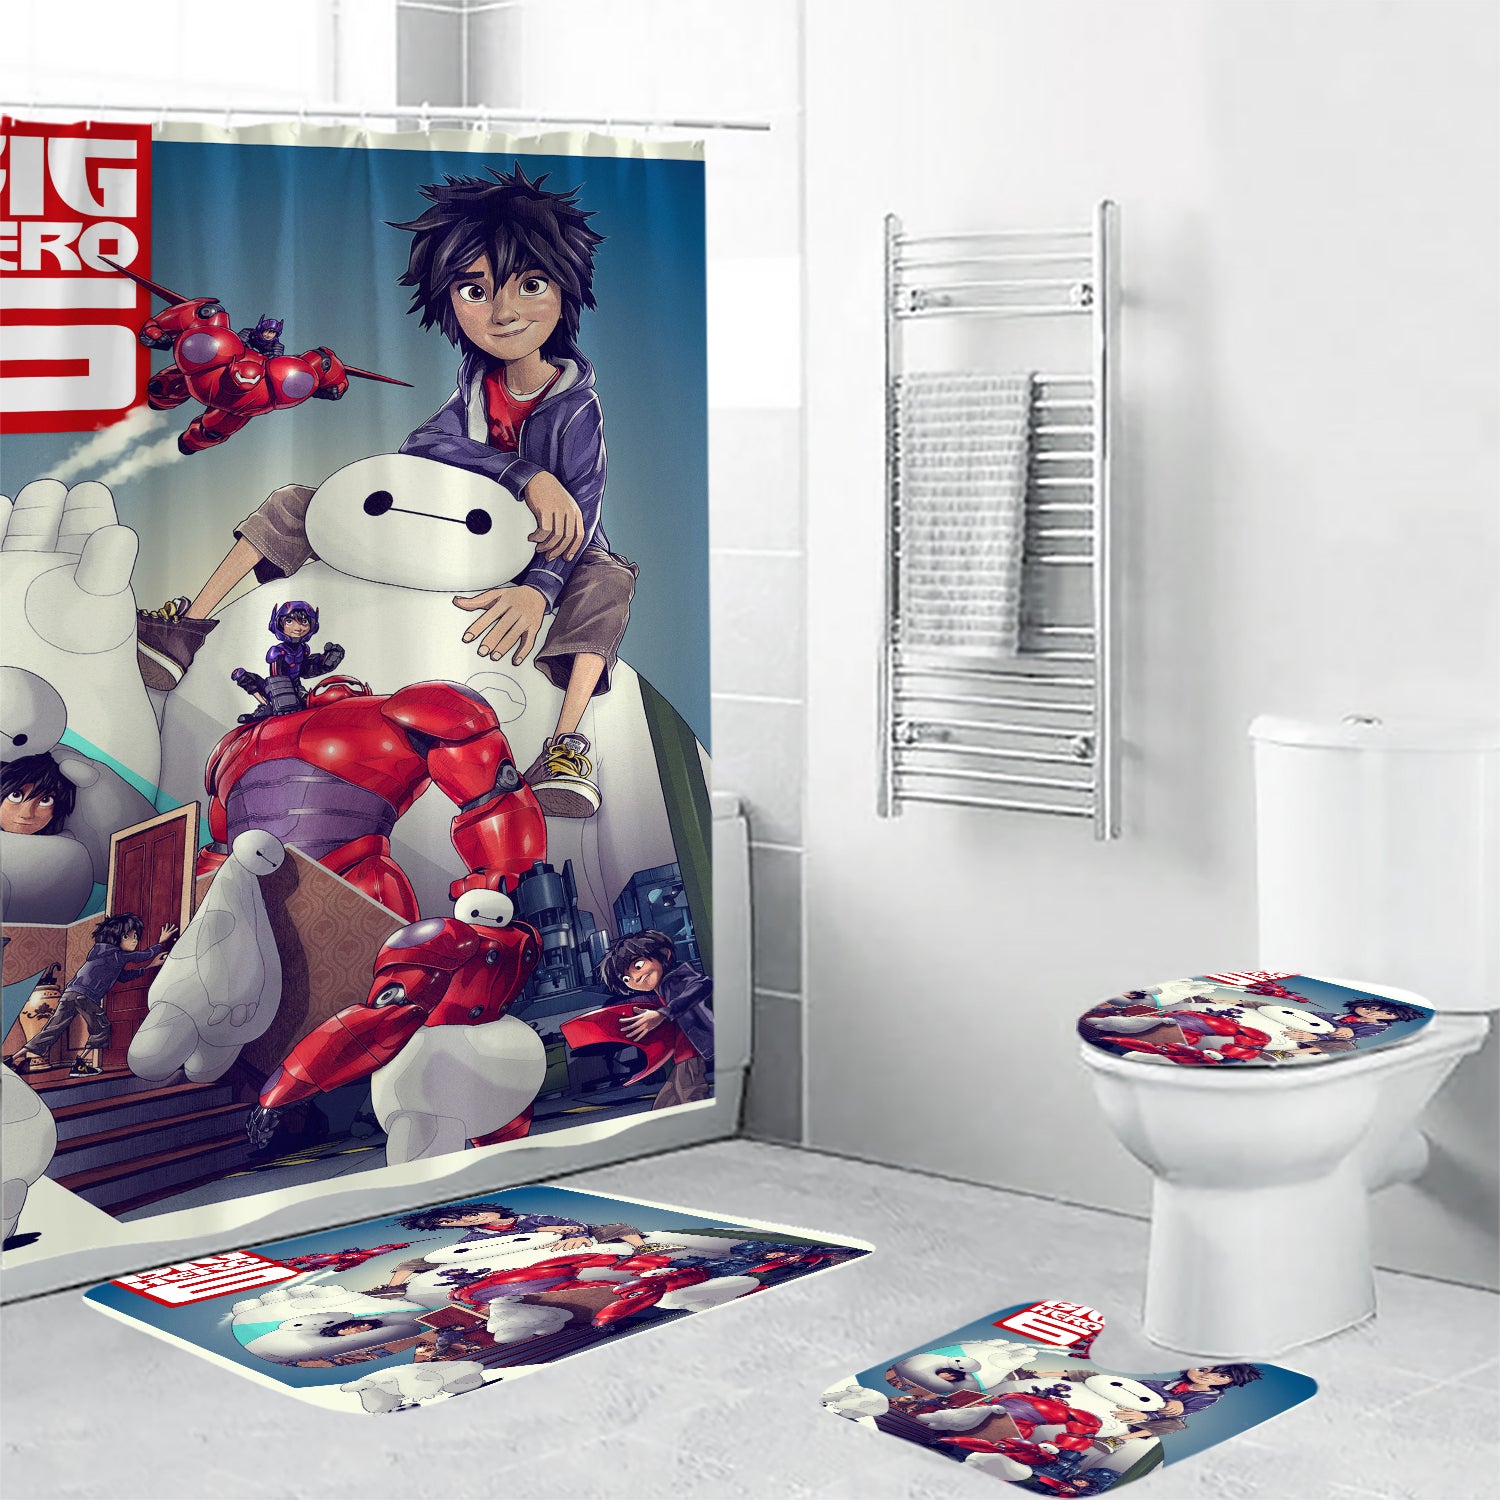 Big Hero 6 Poster 1 Waterproof Shower Curtain Non-Slip Toilet Lid Cover Bath Mat - Bathroom Set